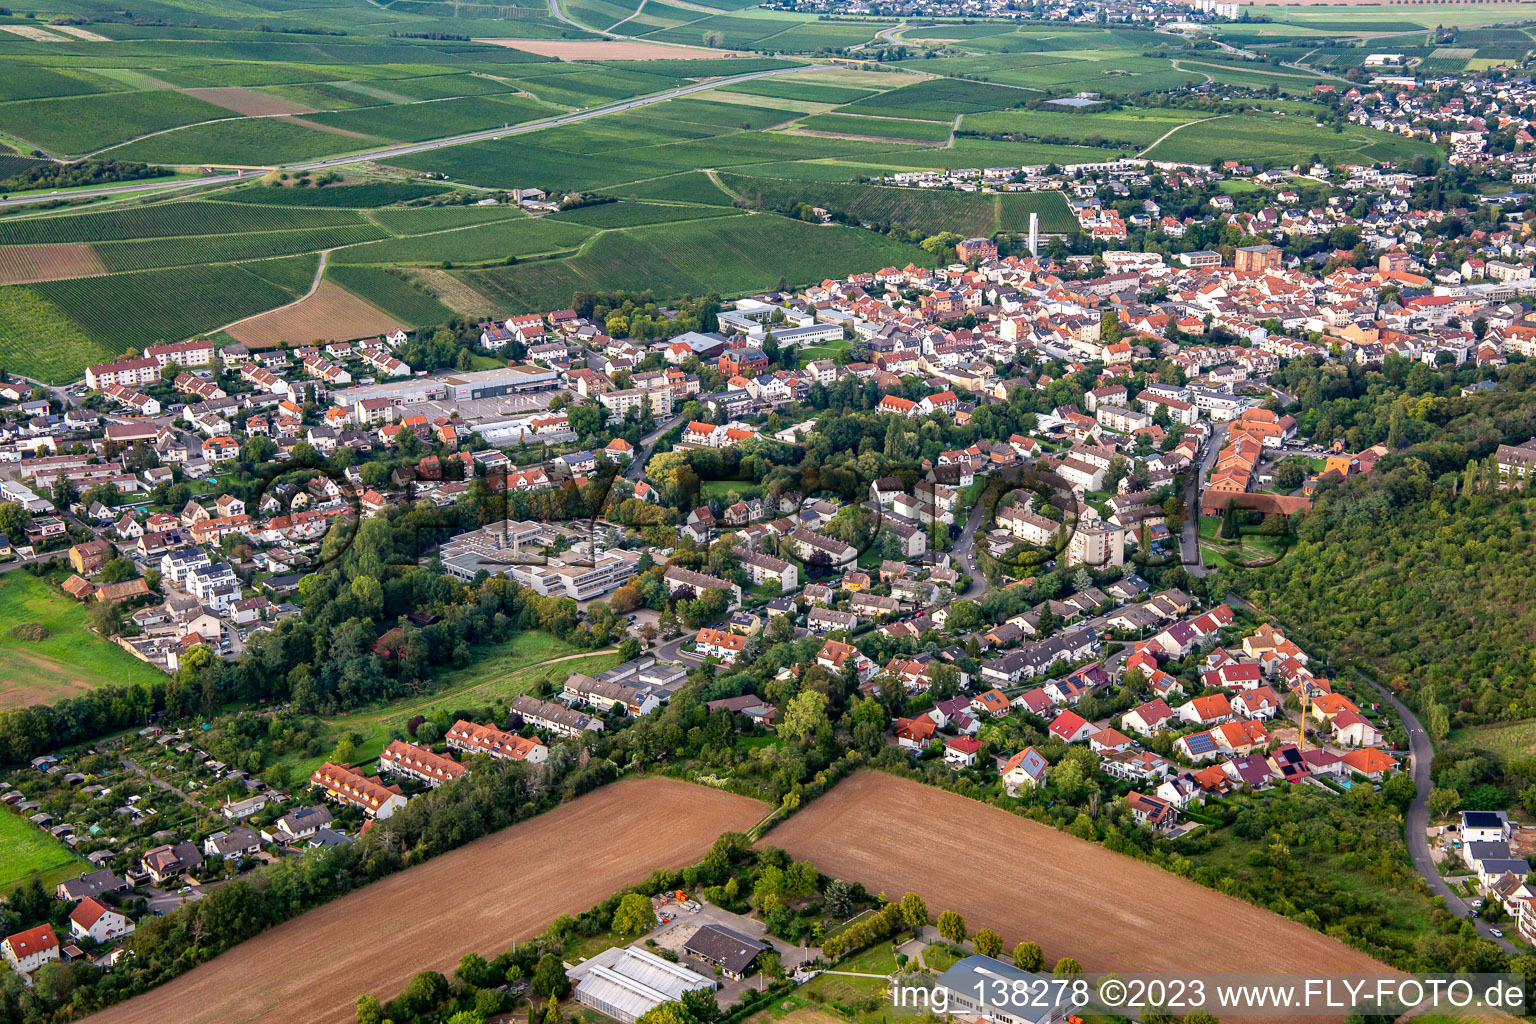 Bad Kreuznach in the state Rhineland-Palatinate, Germany